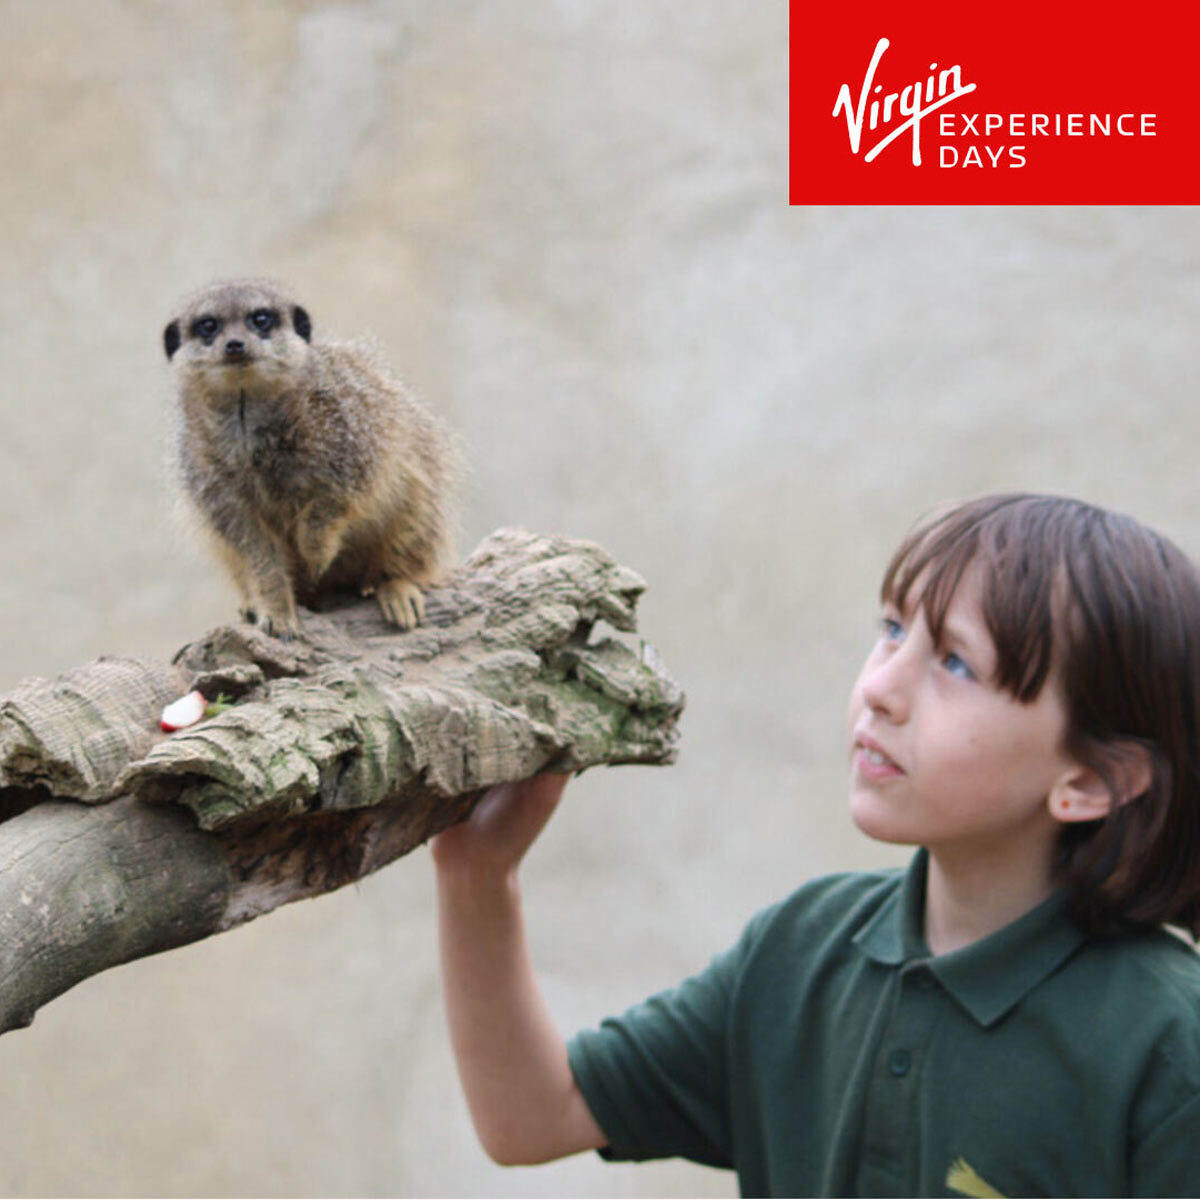 Buy Virgin Experience Junior Animal Keeper Experience Image3 at Costco.co.uk